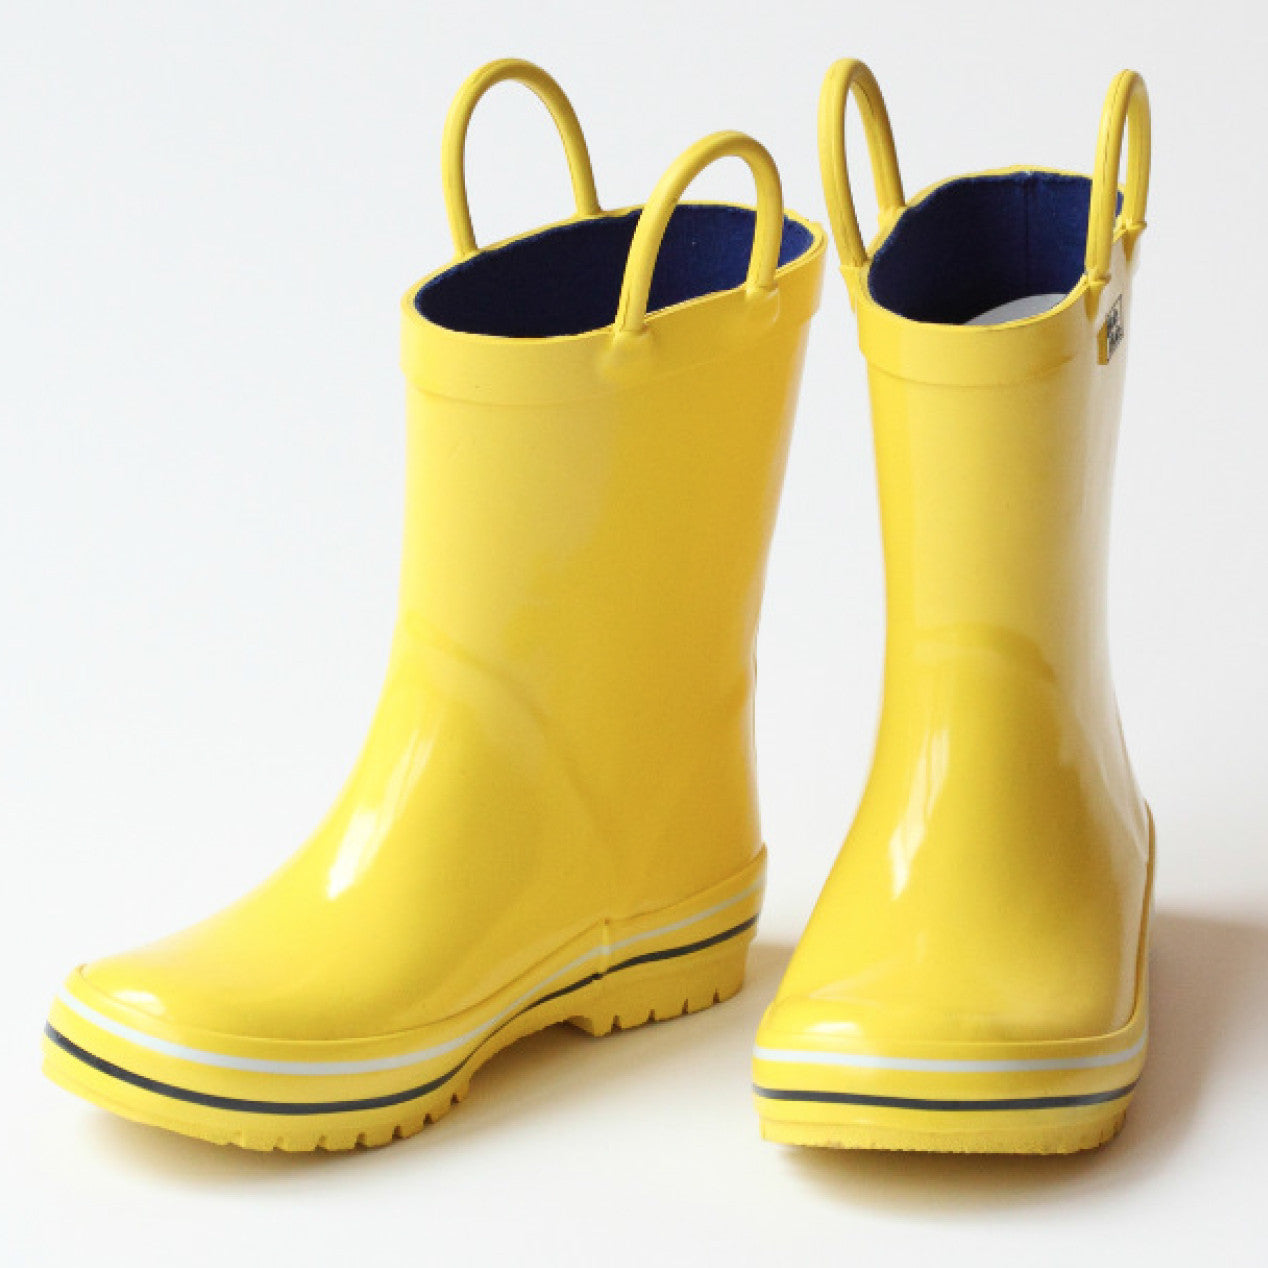 yellow infant rain boots